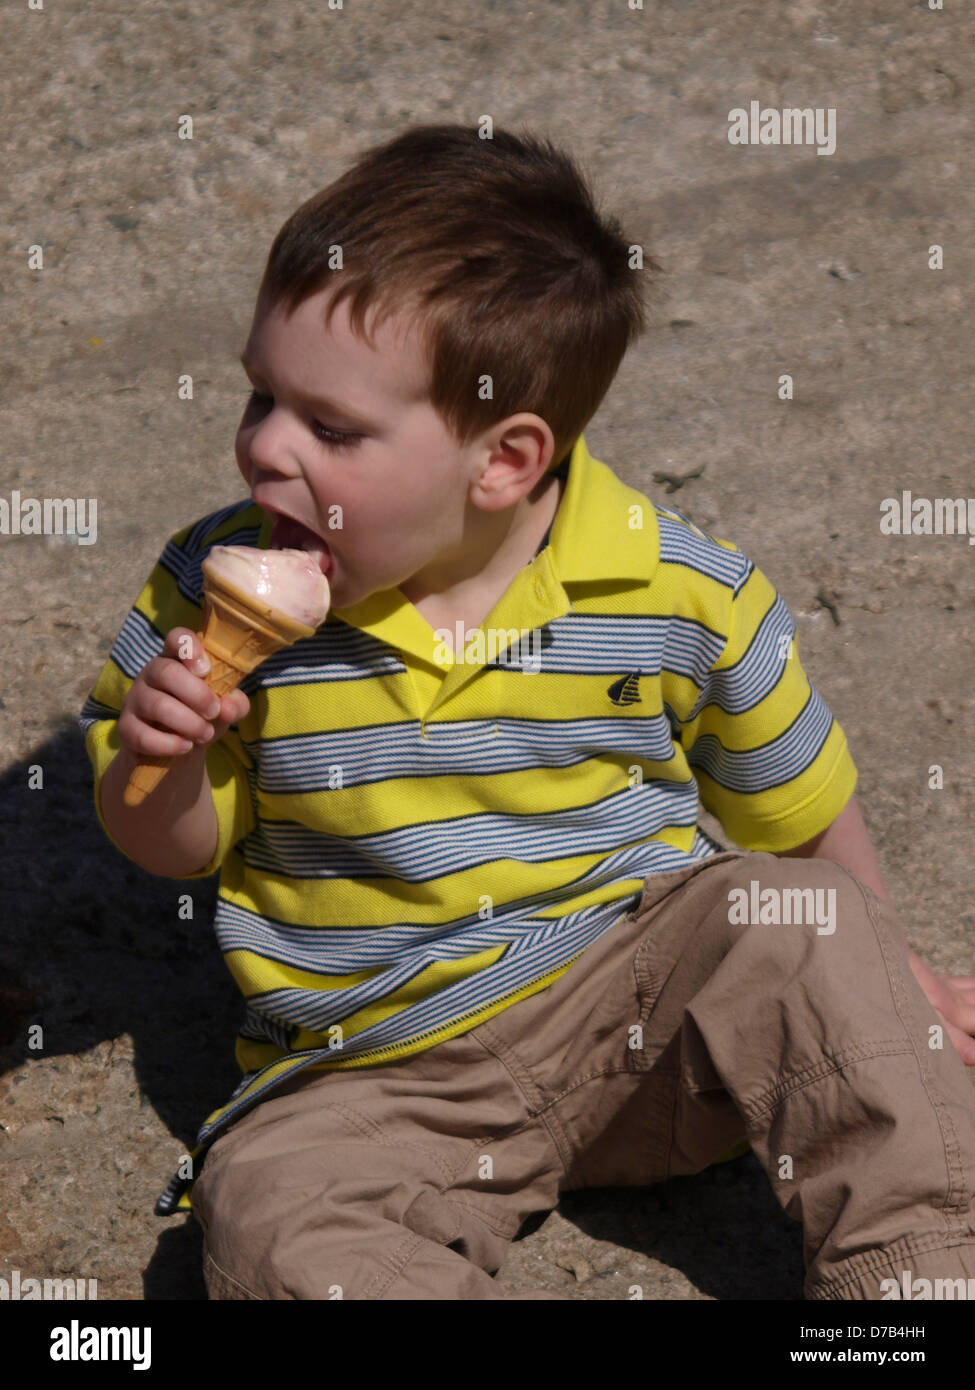 Young boy eating an icecream, UK 2013 Stock Photo